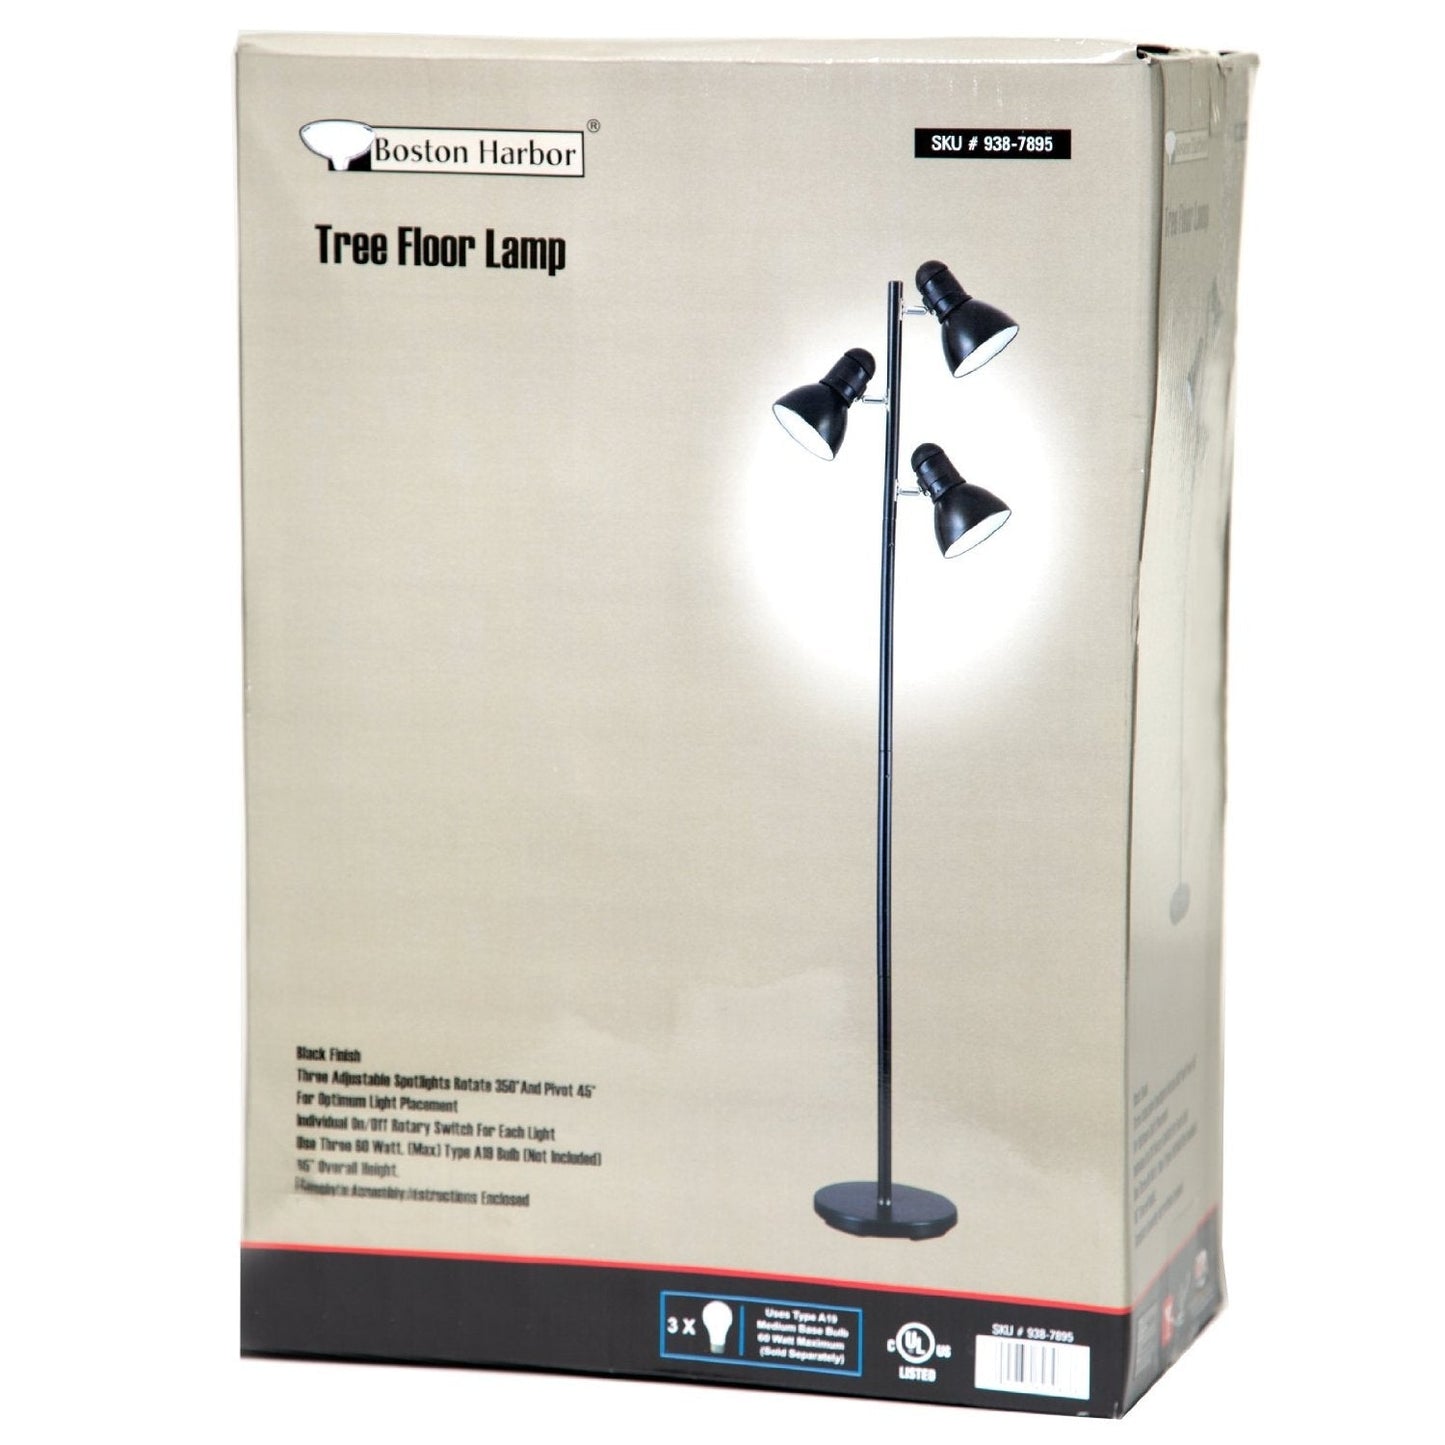 Lighting > Floor Lamps - 65-inch Black 3-Light Tree Lamp Spotlight Floor Lamp